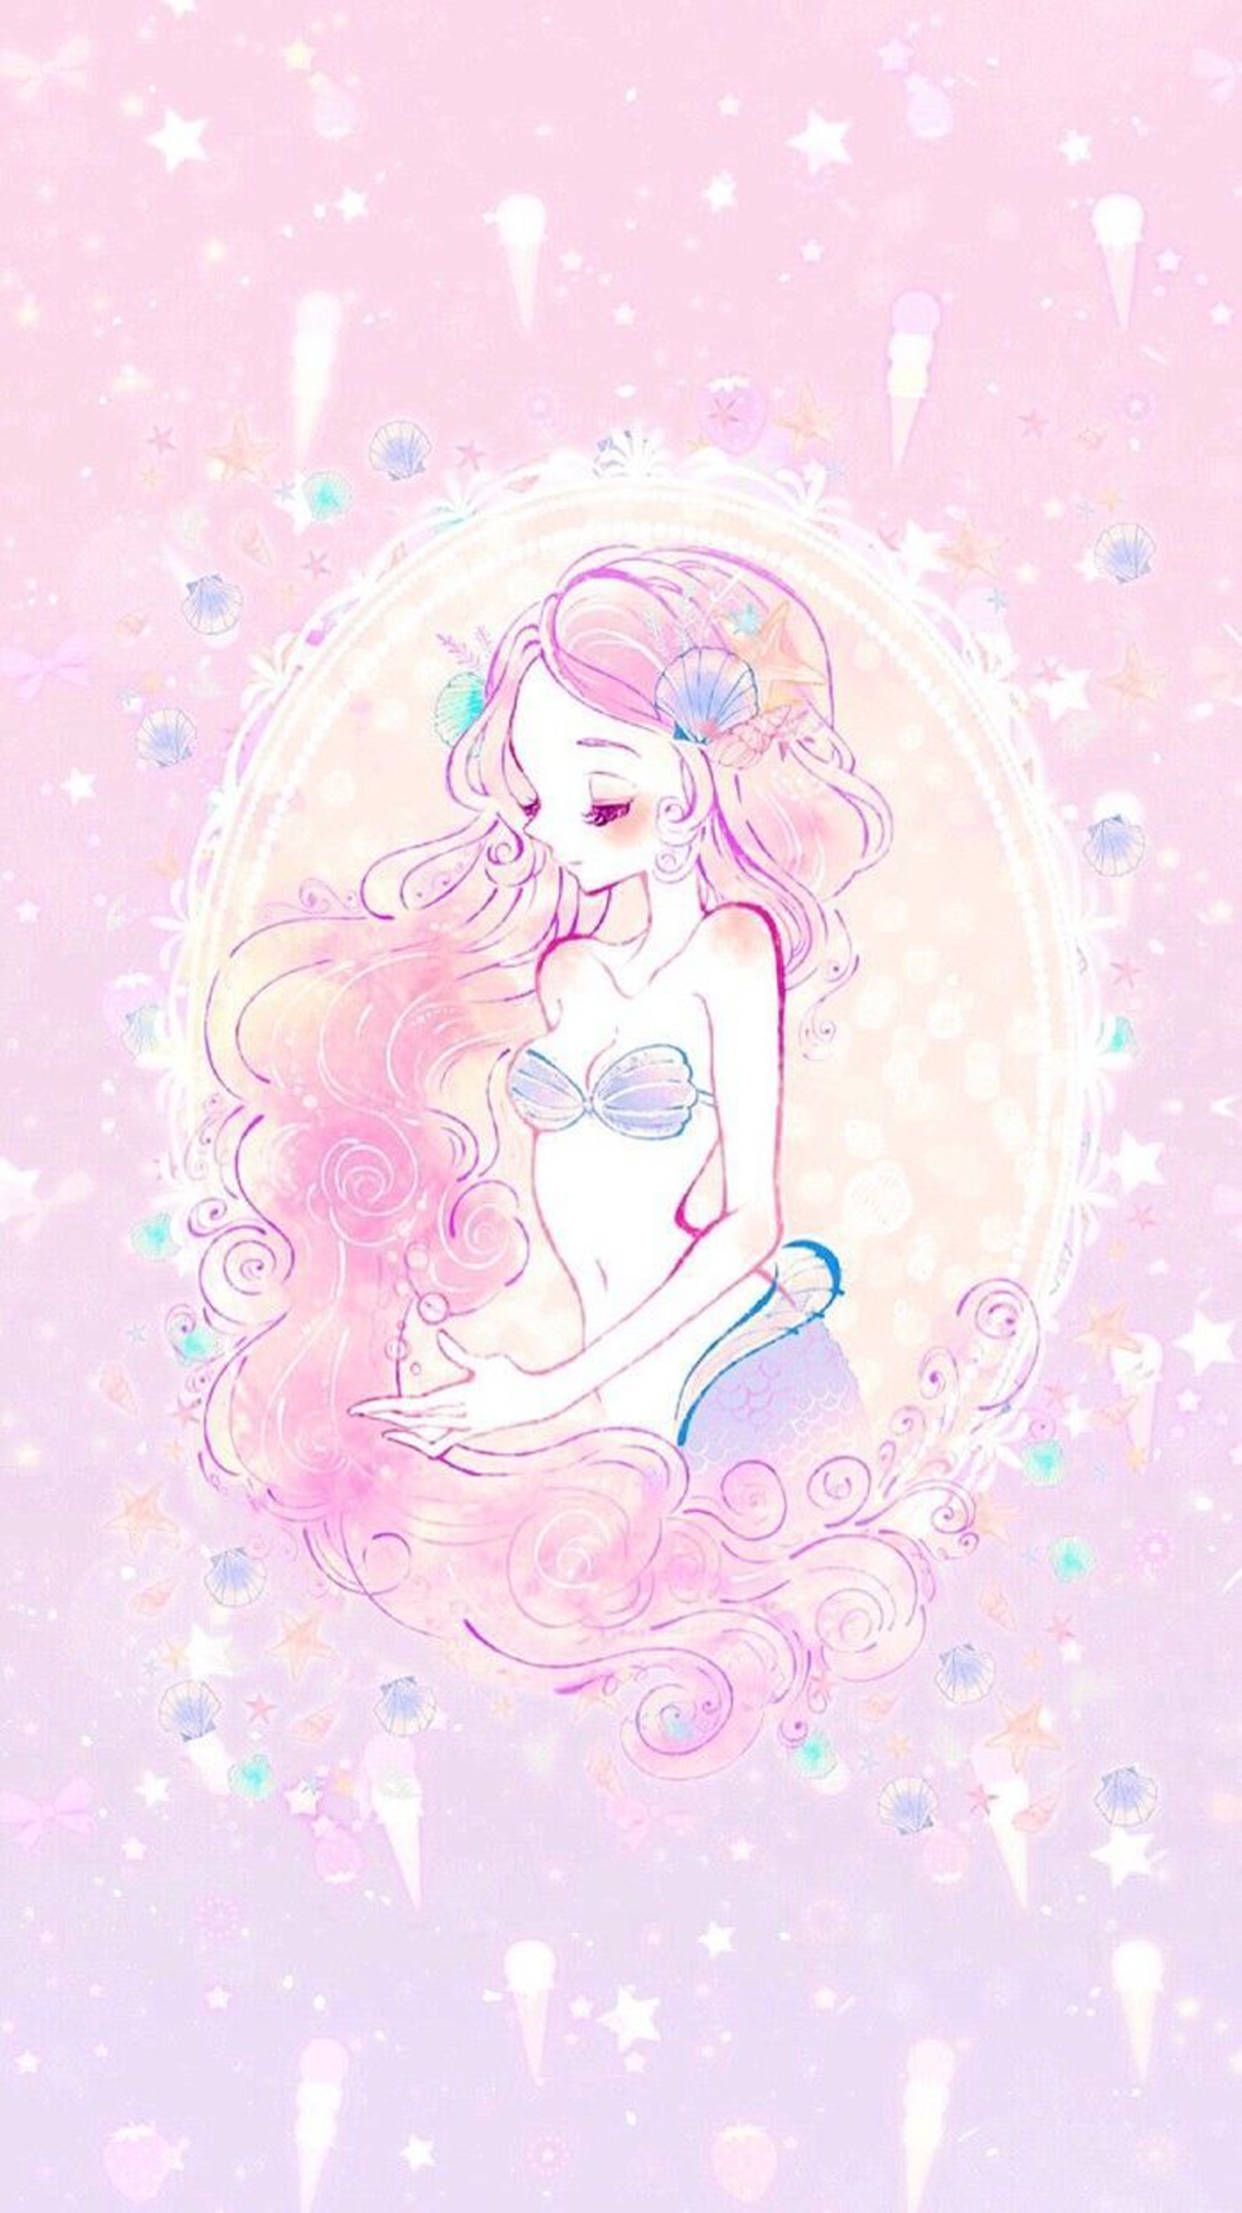 A cute mermaid girl with pink hair and stars - Mermaid